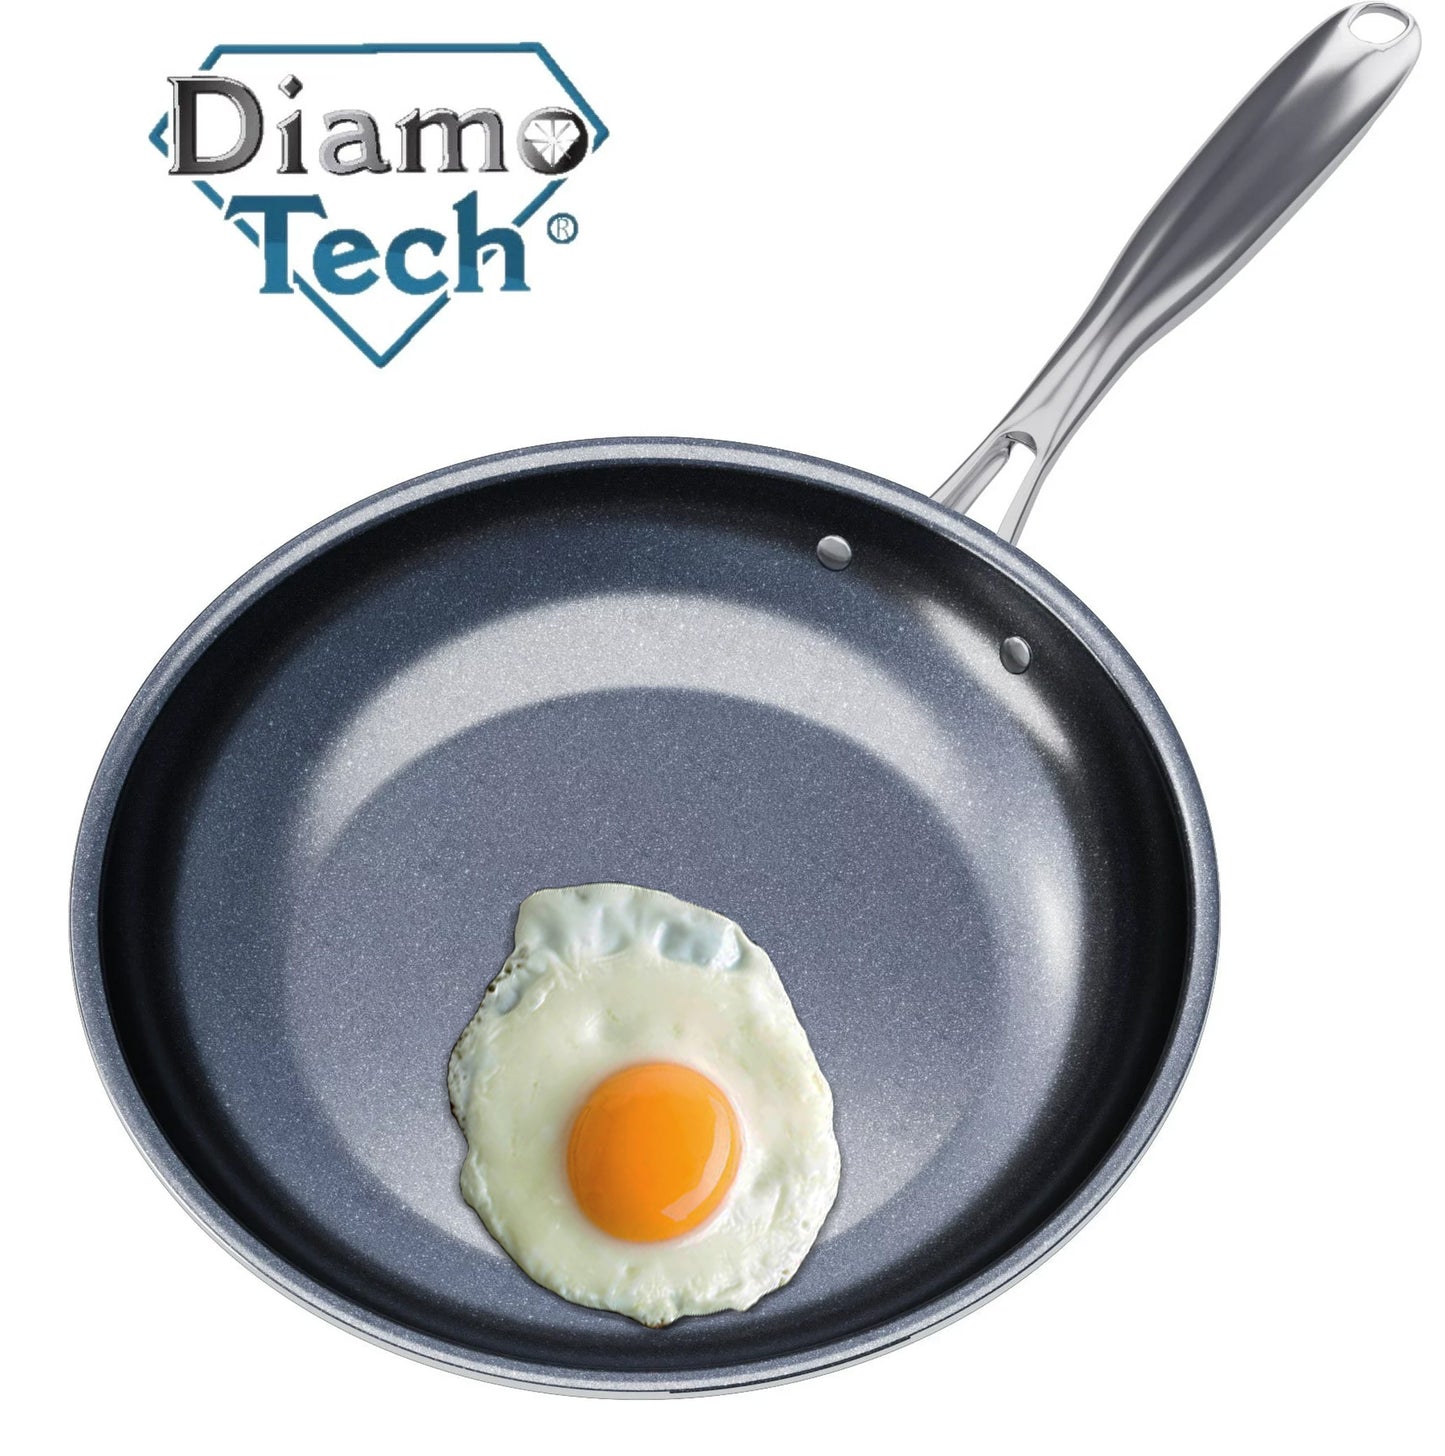 2 Units, DiamoTech 9.5" Frying Pan - 4-Layer Diamond Ceramic Coating, Nonstick & Durable, Toxin Free